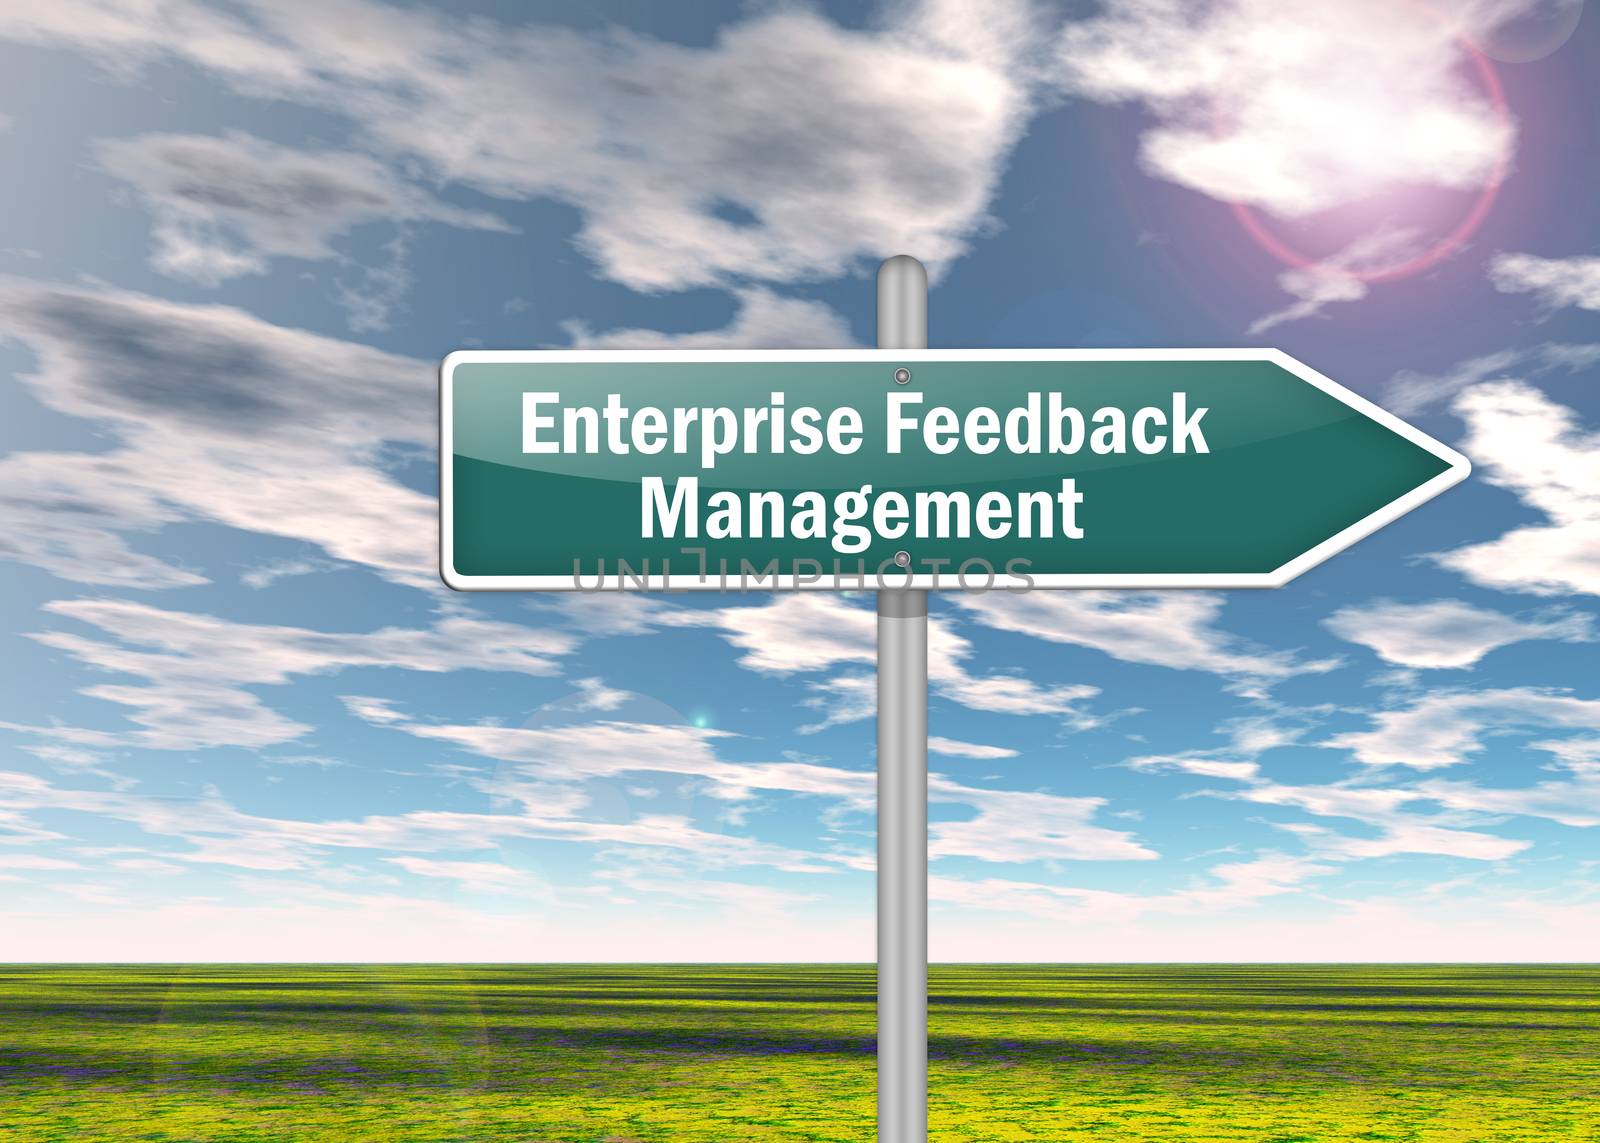 Signpost with Enterprise Feedback Management wording